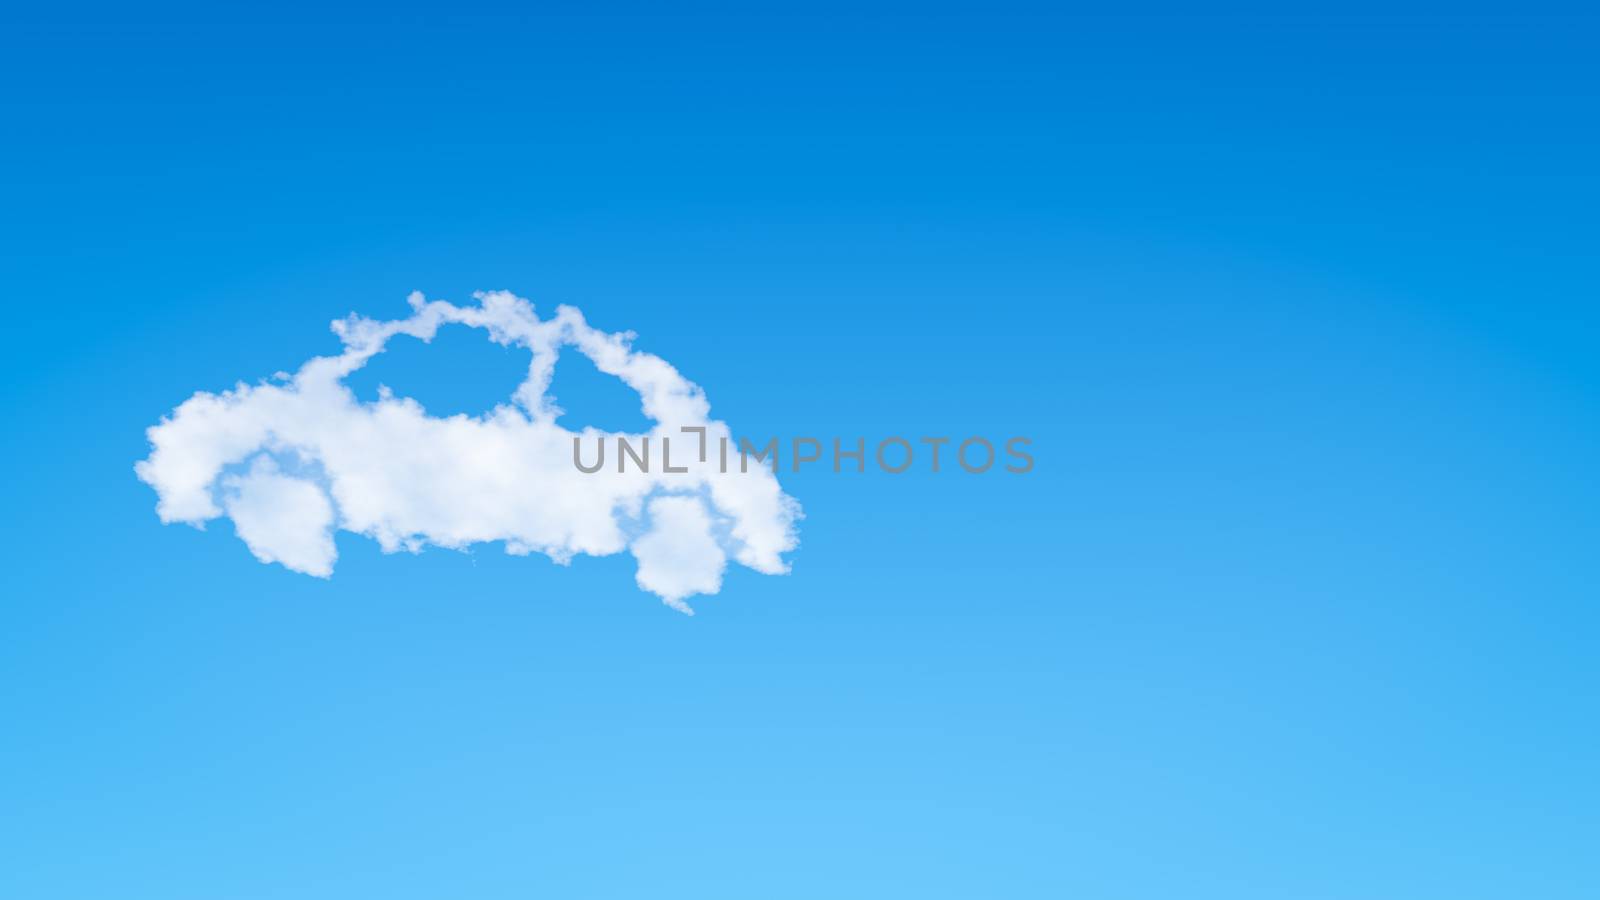 Car Symbol Shape Cloud in the Blue Sky with Copyspace